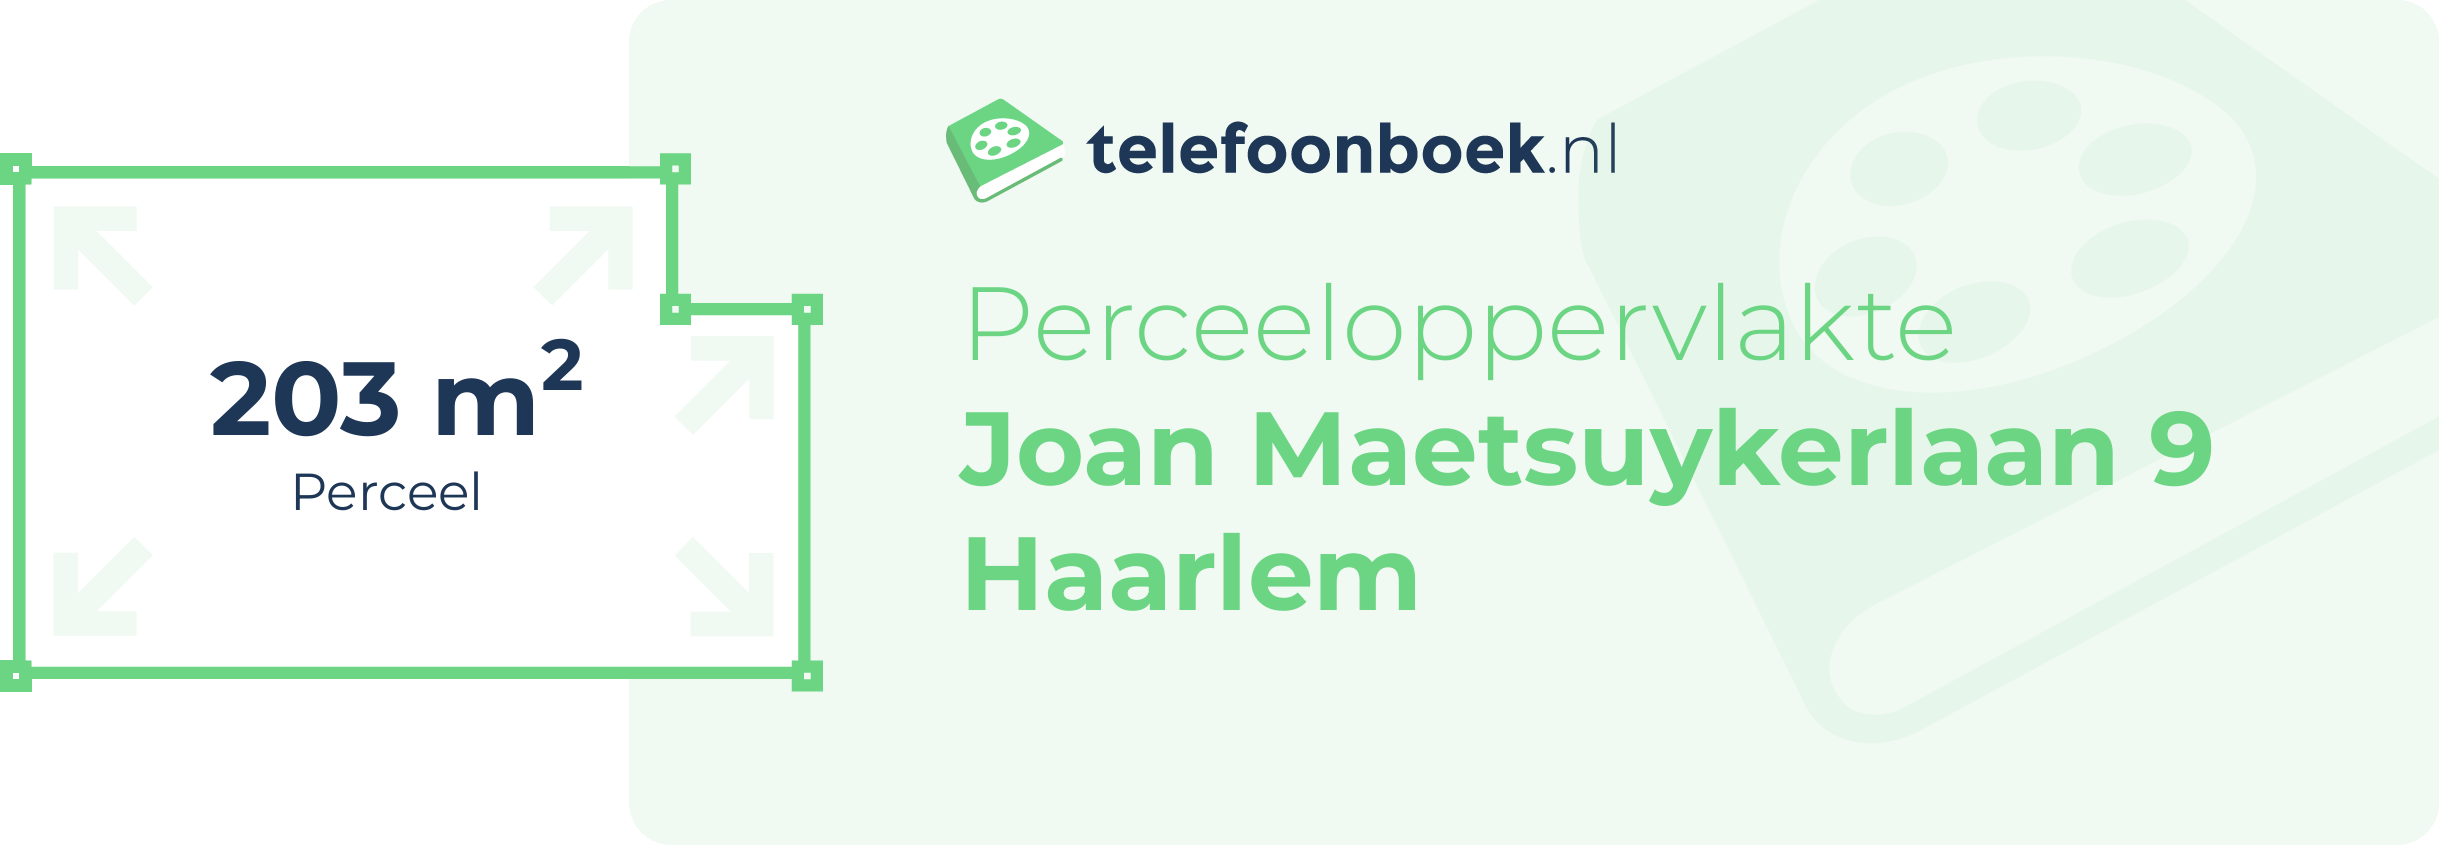 Perceeloppervlakte Joan Maetsuykerlaan 9 Haarlem